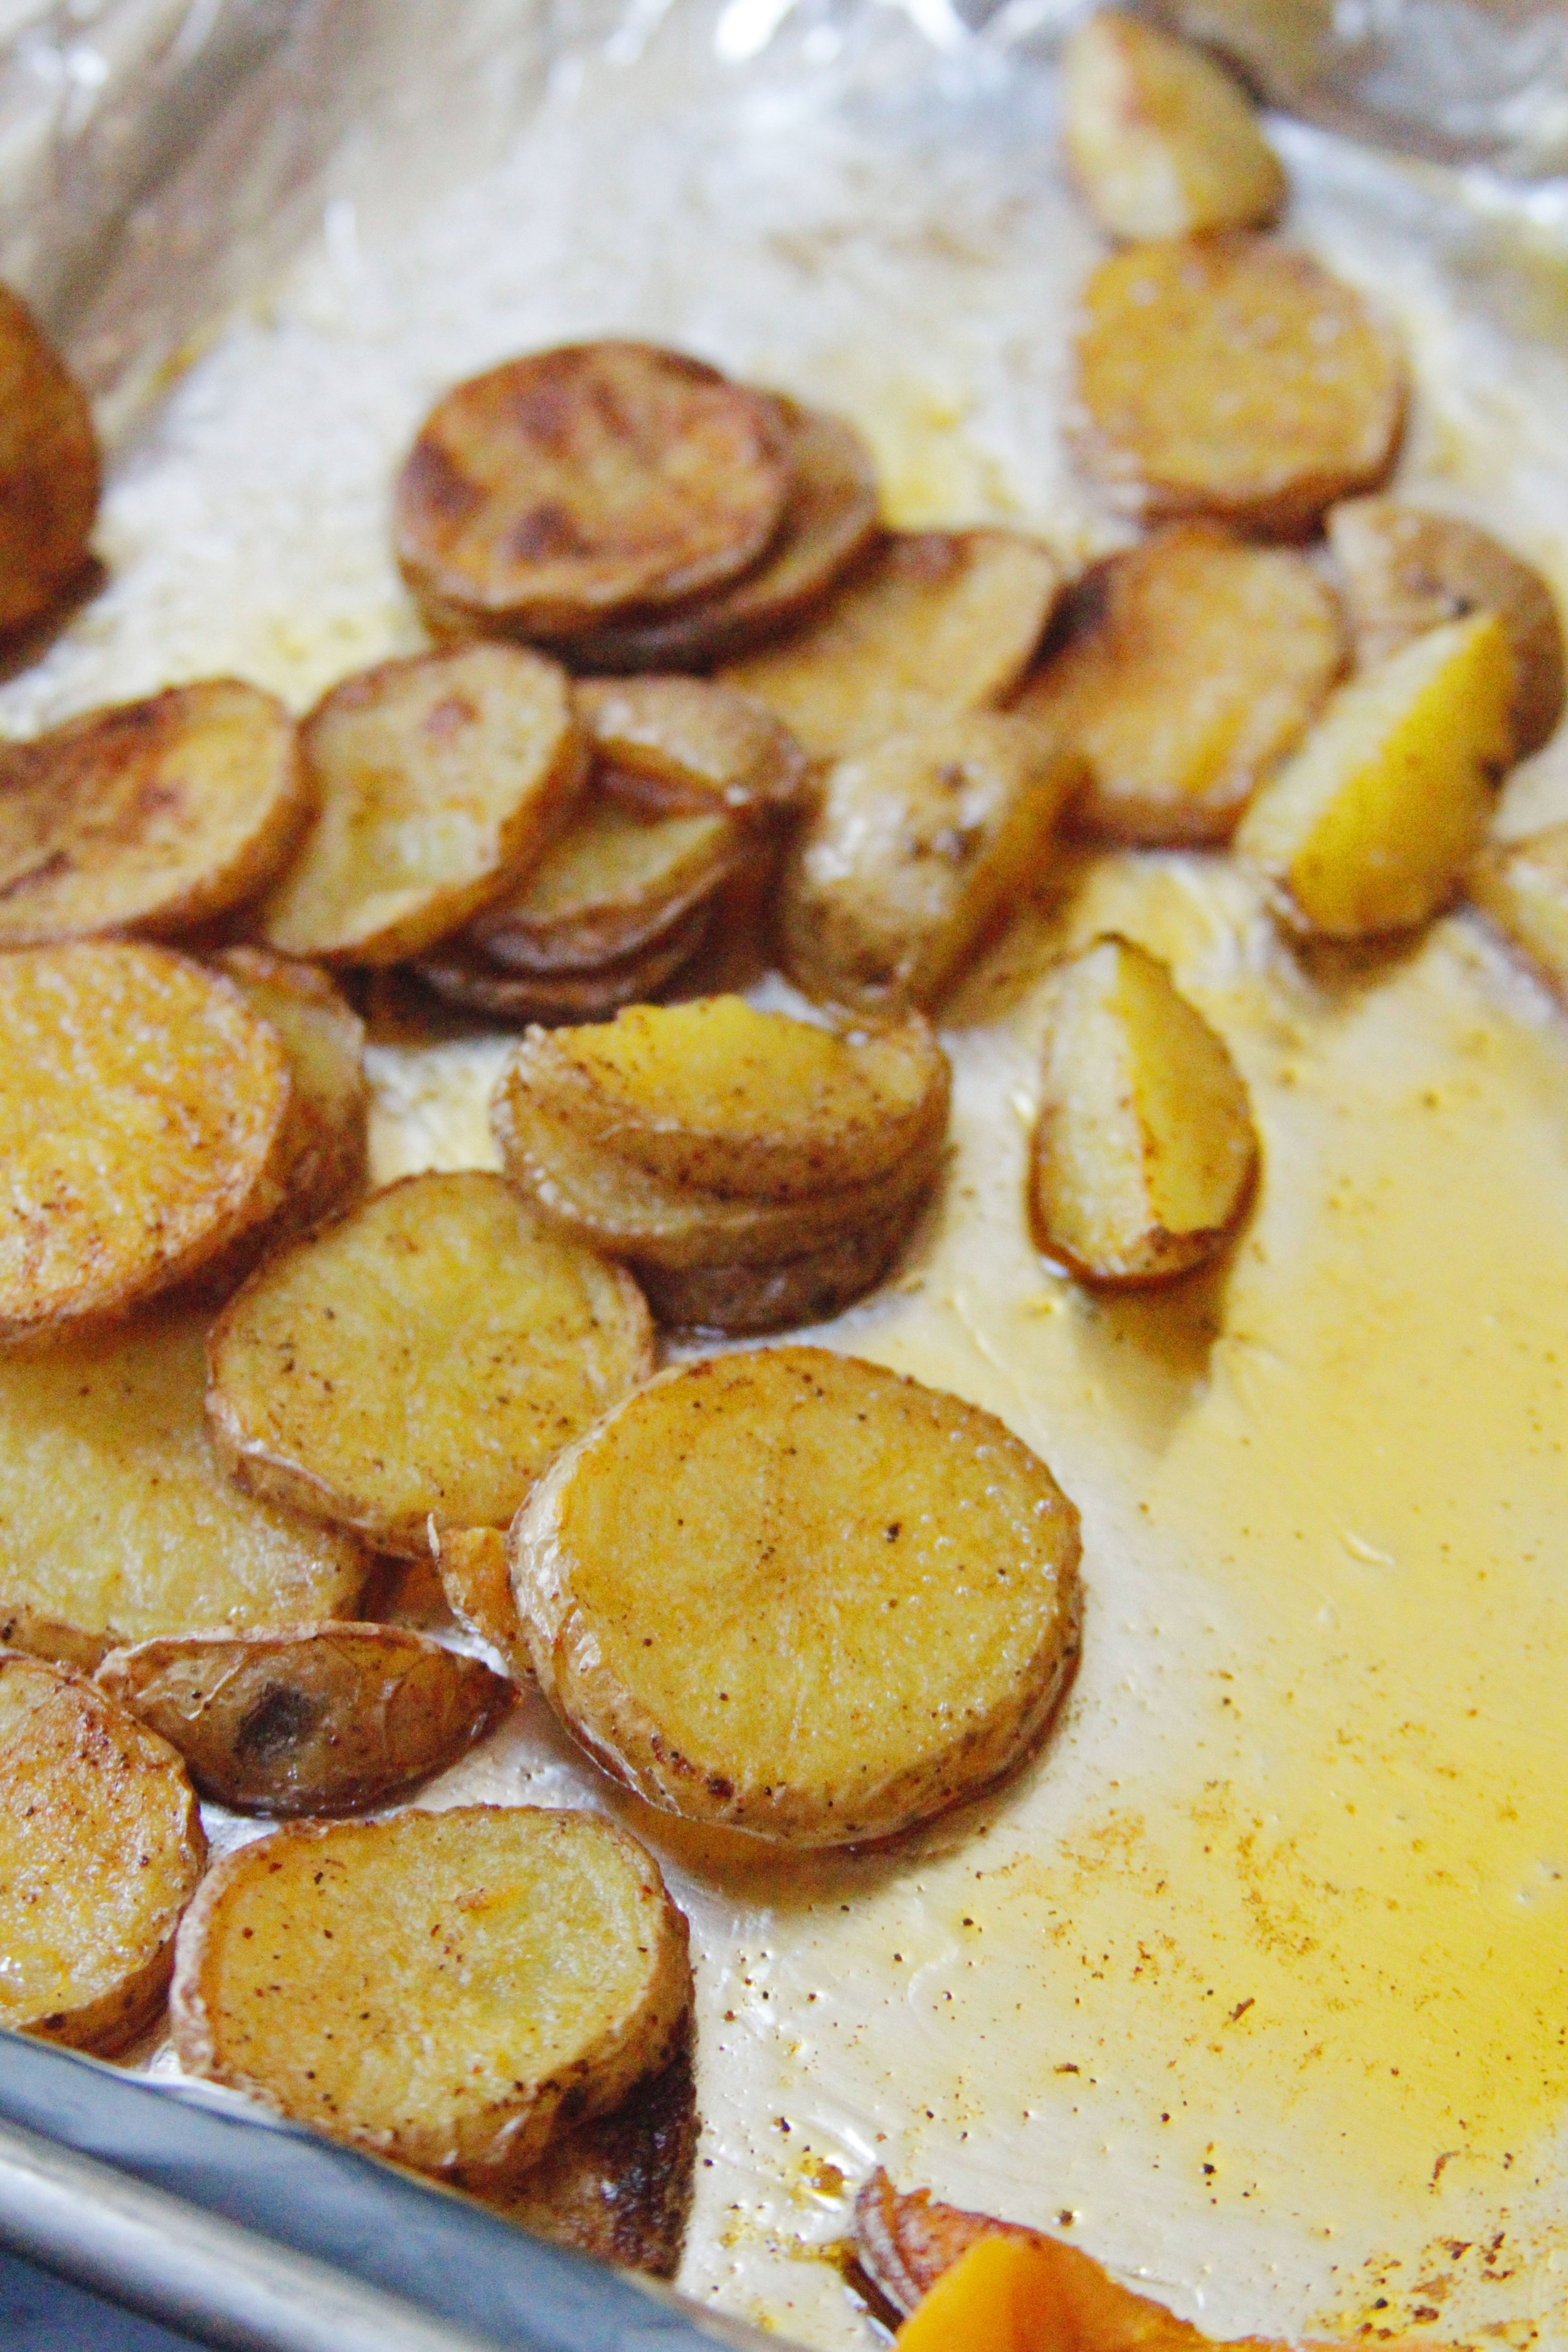 Street corn-style roasted poatoes